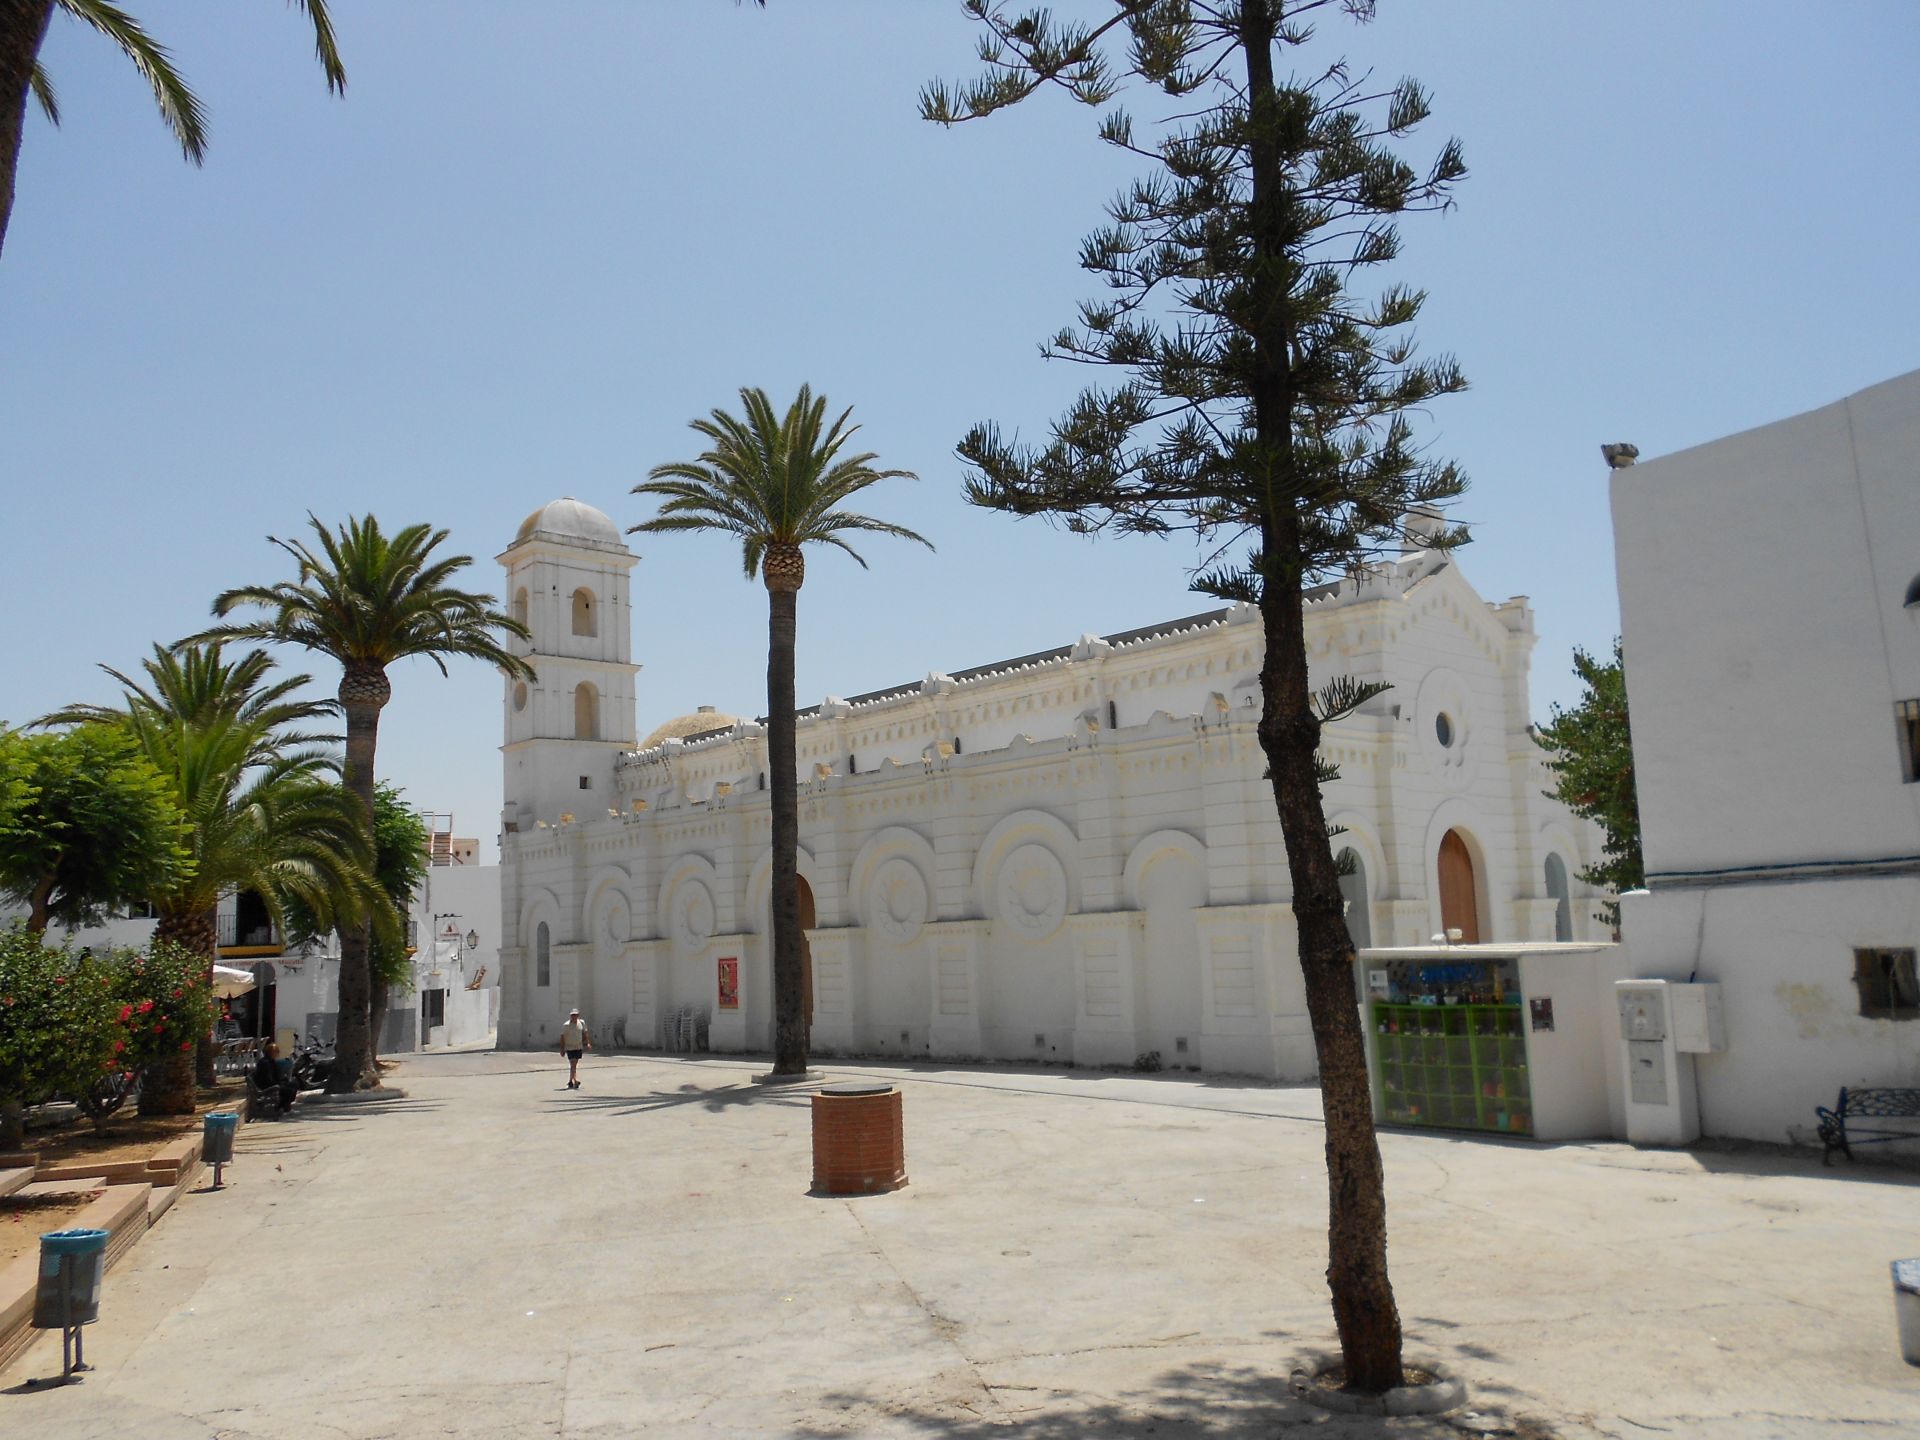 Conil de la Frontera - Cadiz Province